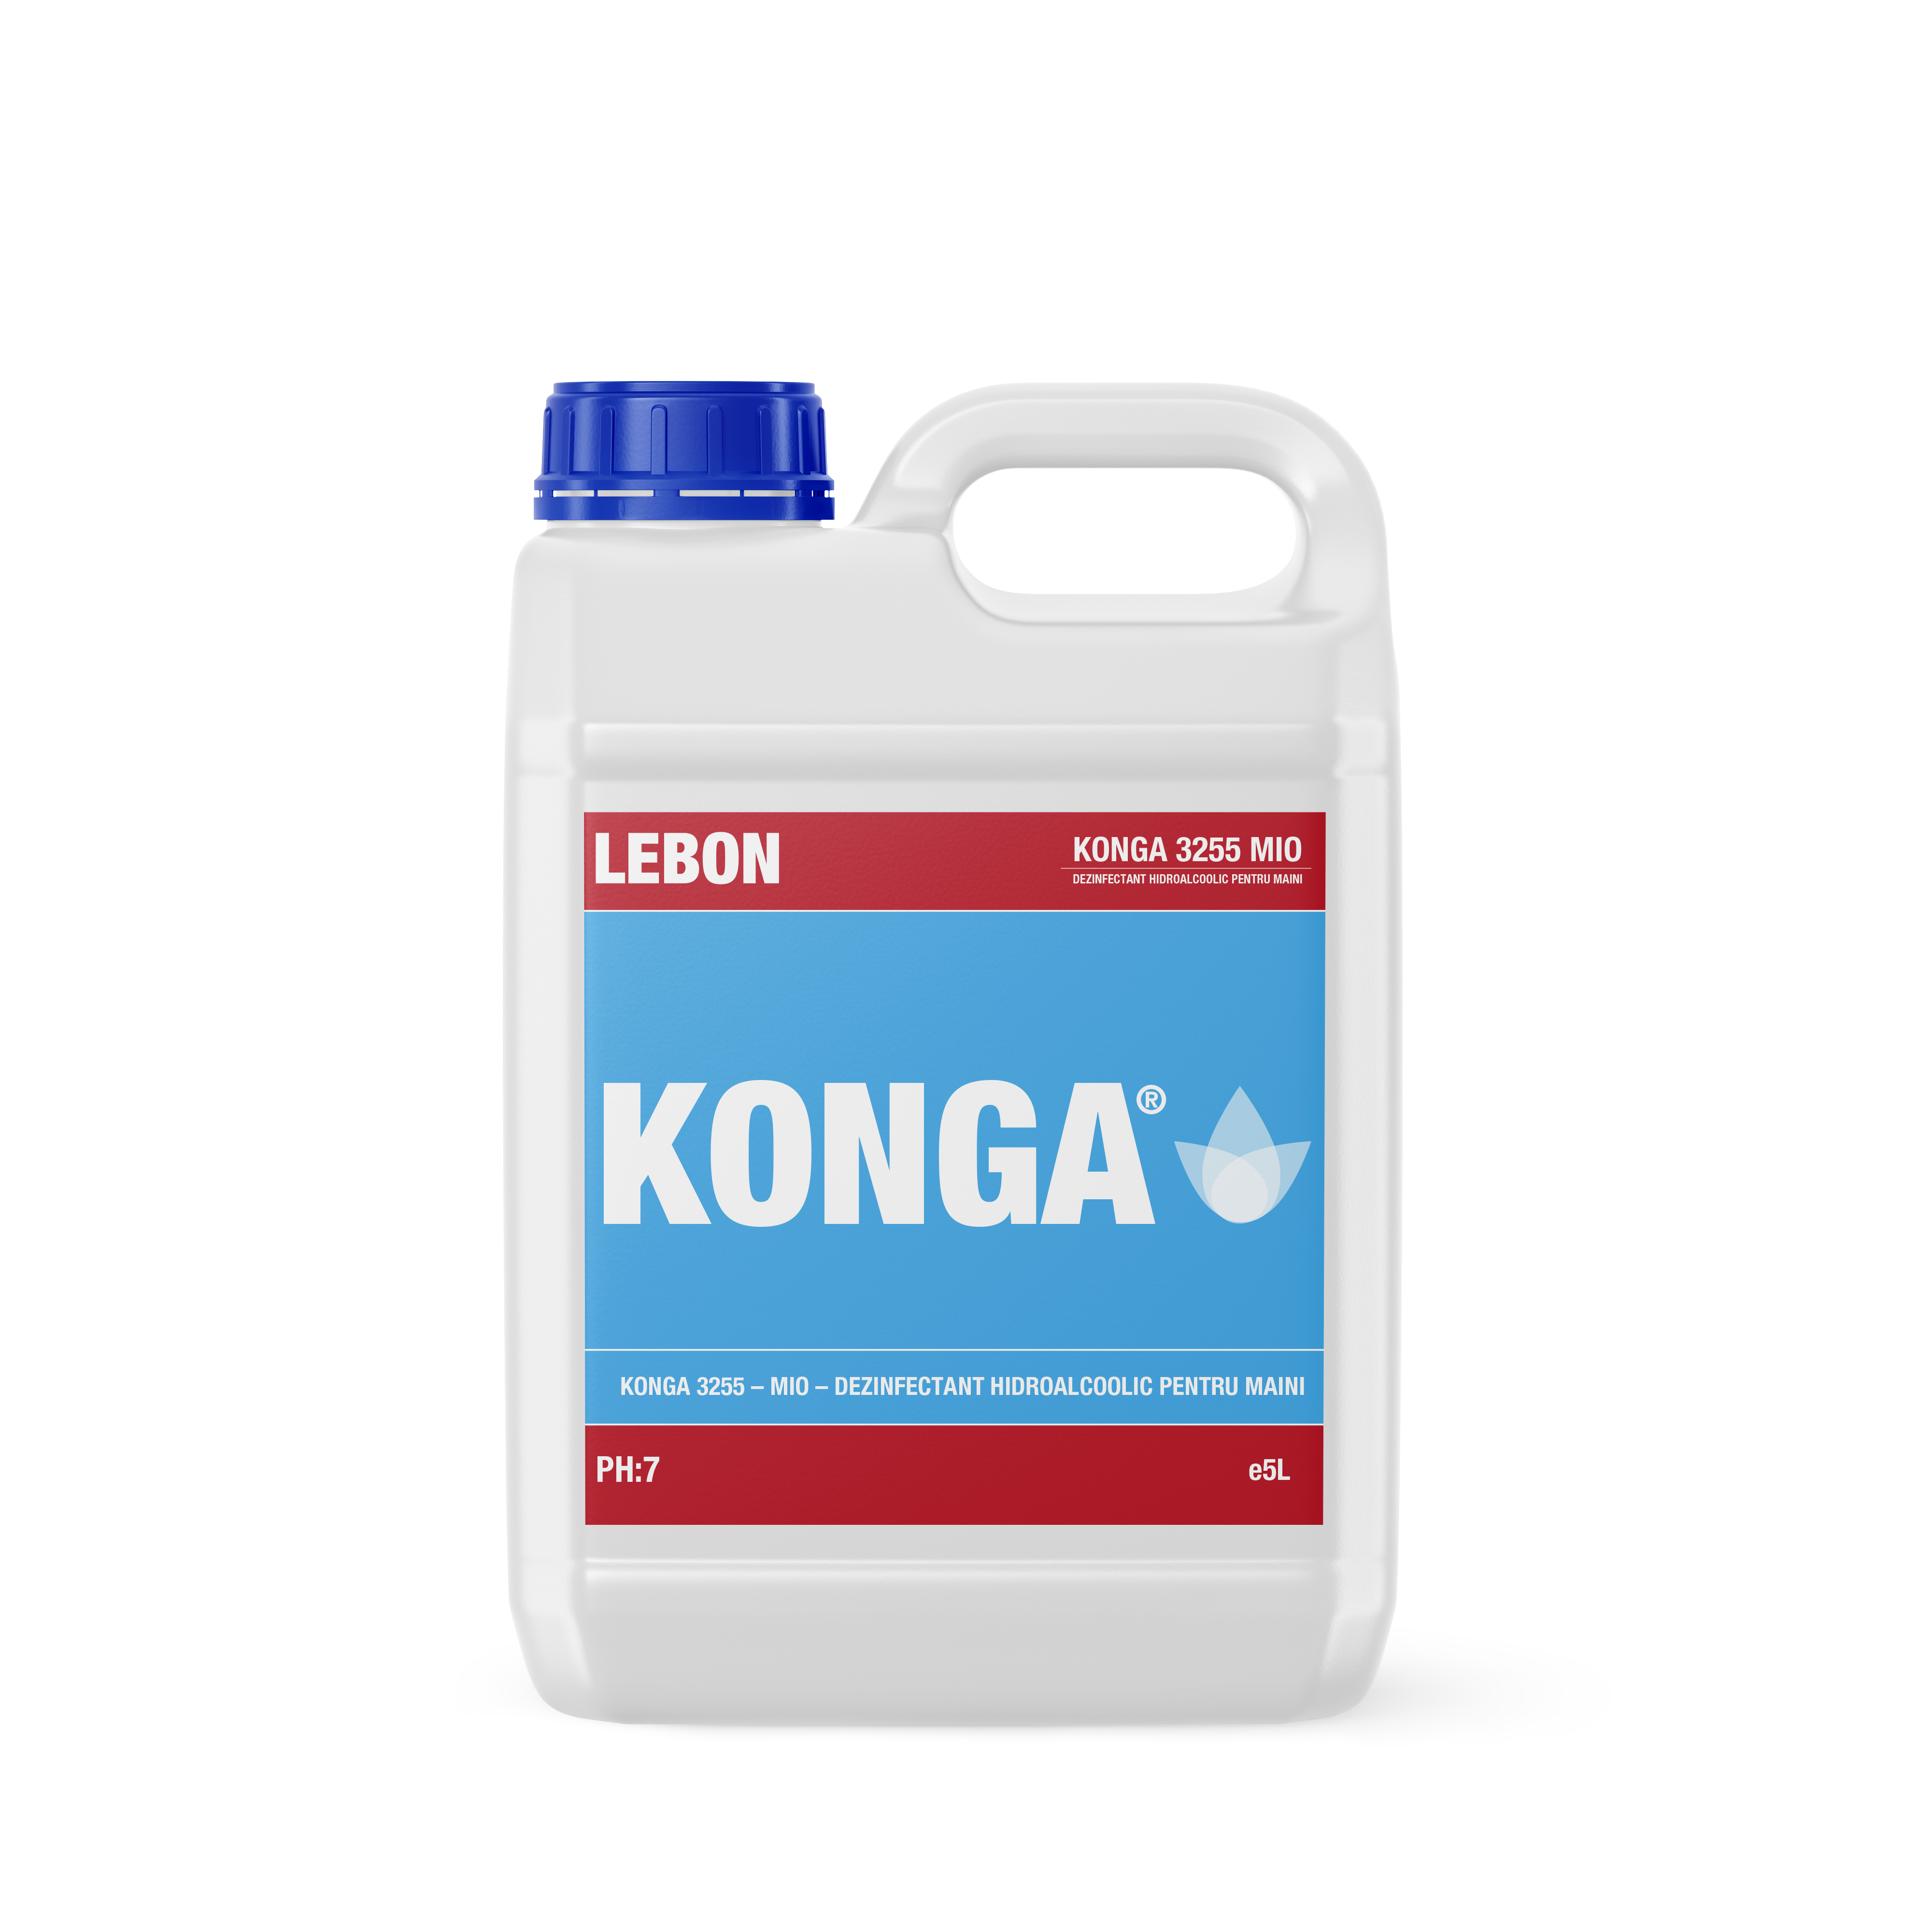 Dezinfectant hidroalcoolic pentru maini uz sanitar Konga Mio 5L – Avizat MS Konga